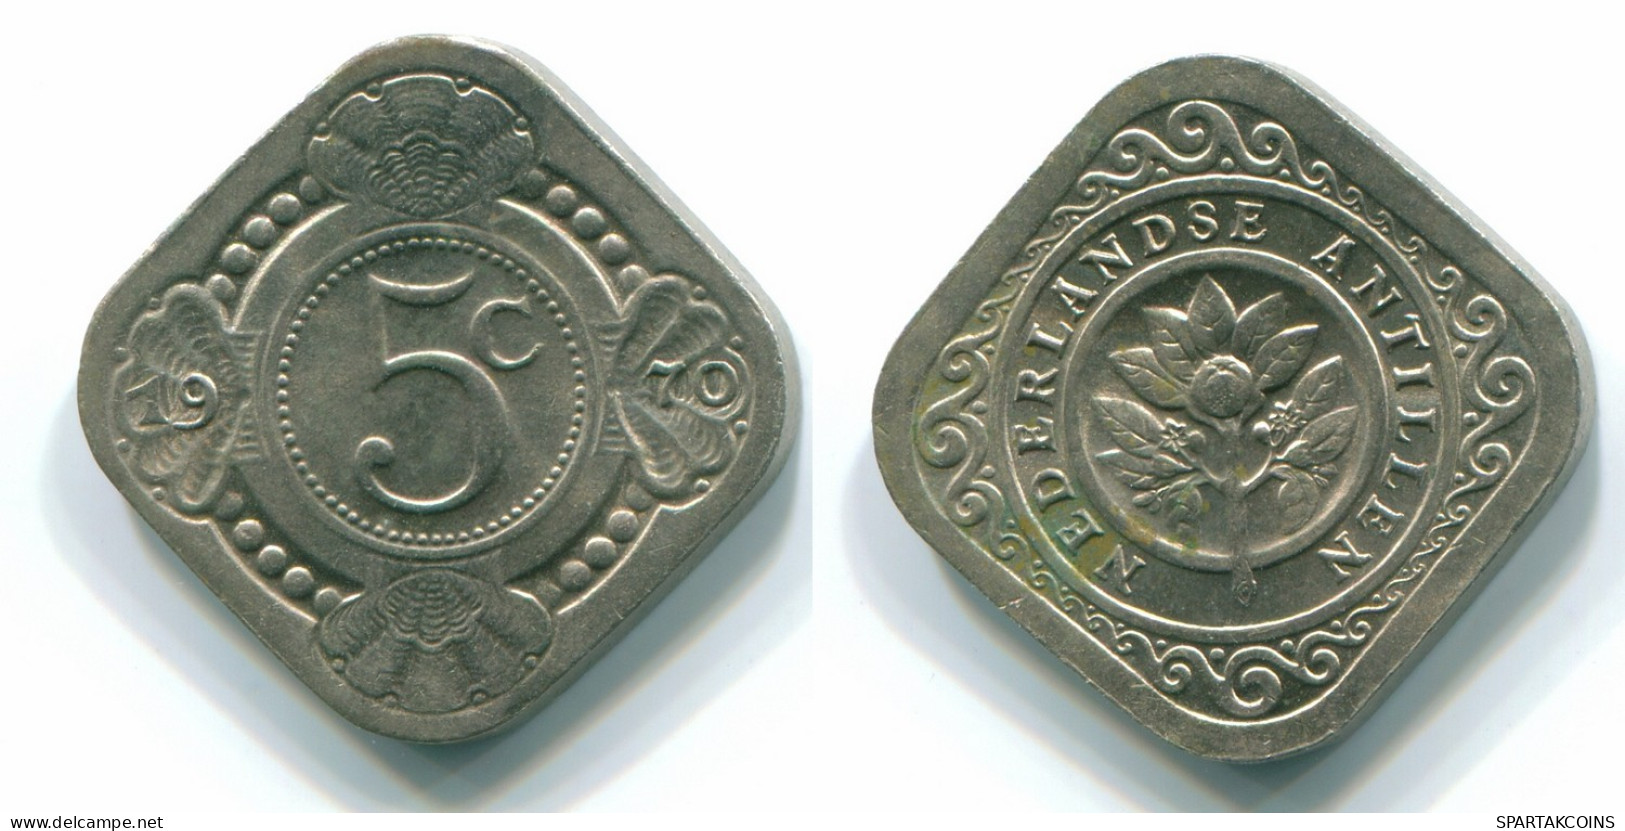 5 CENTS 1970 ANTILLES NÉERLANDAISES Nickel Colonial Pièce #S12505.F.A - Nederlandse Antillen